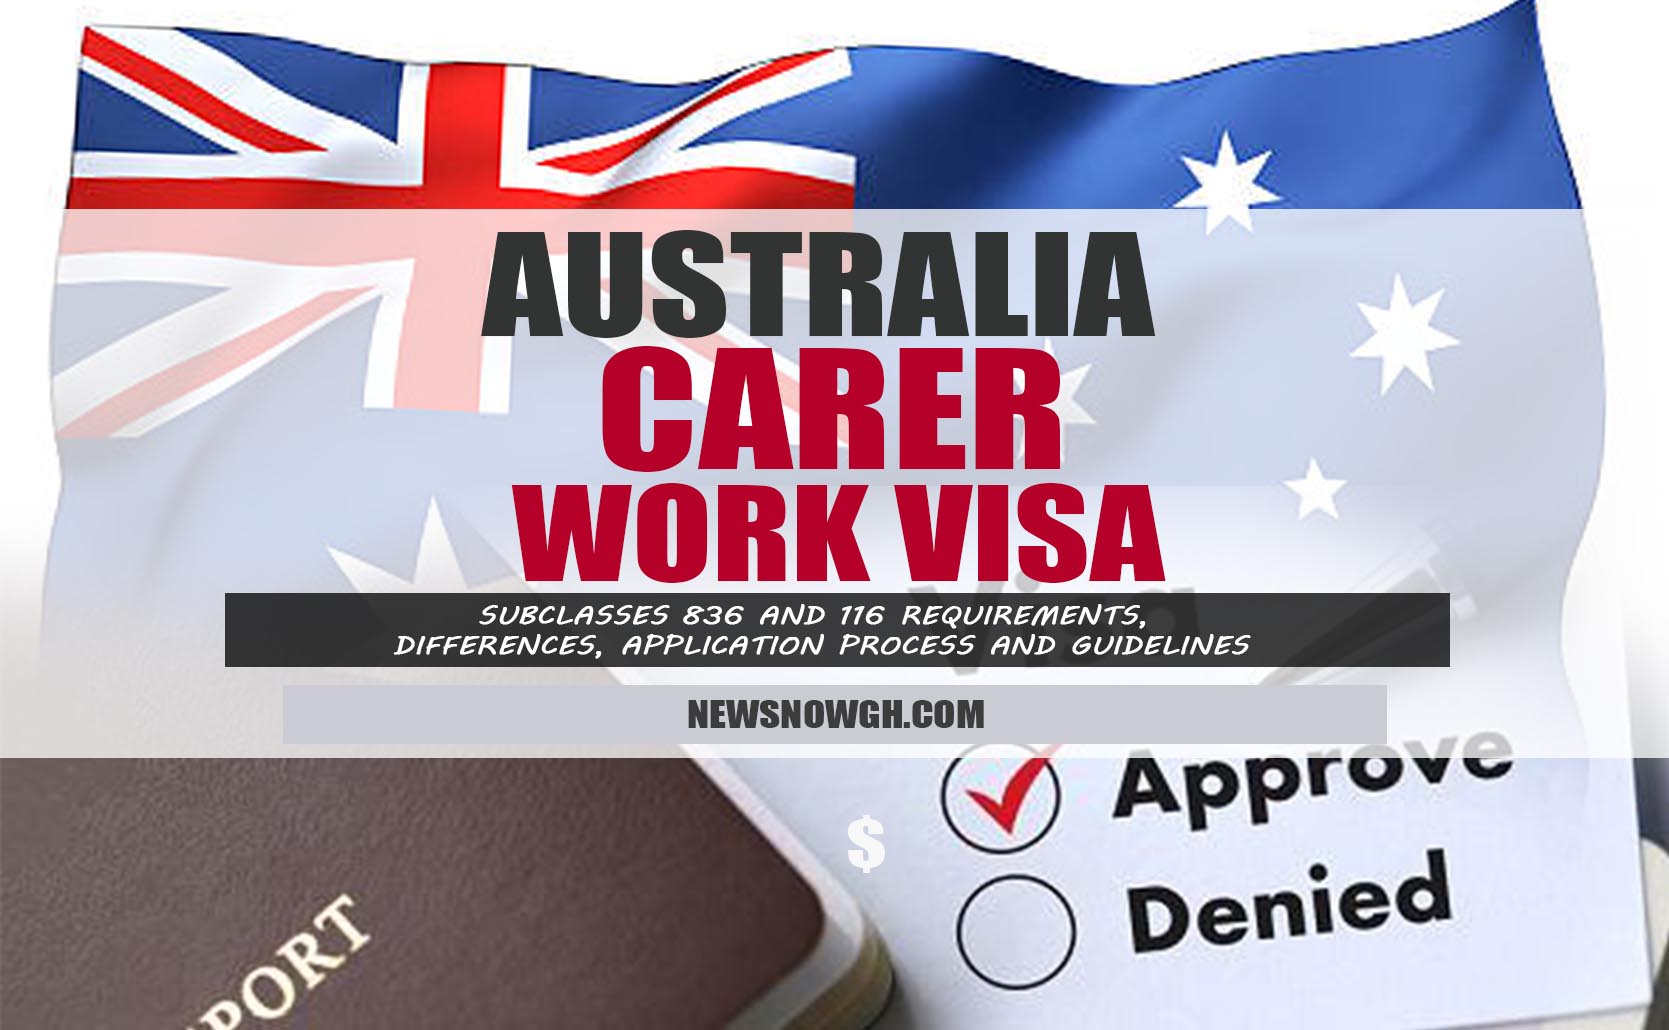 Australia carer visa